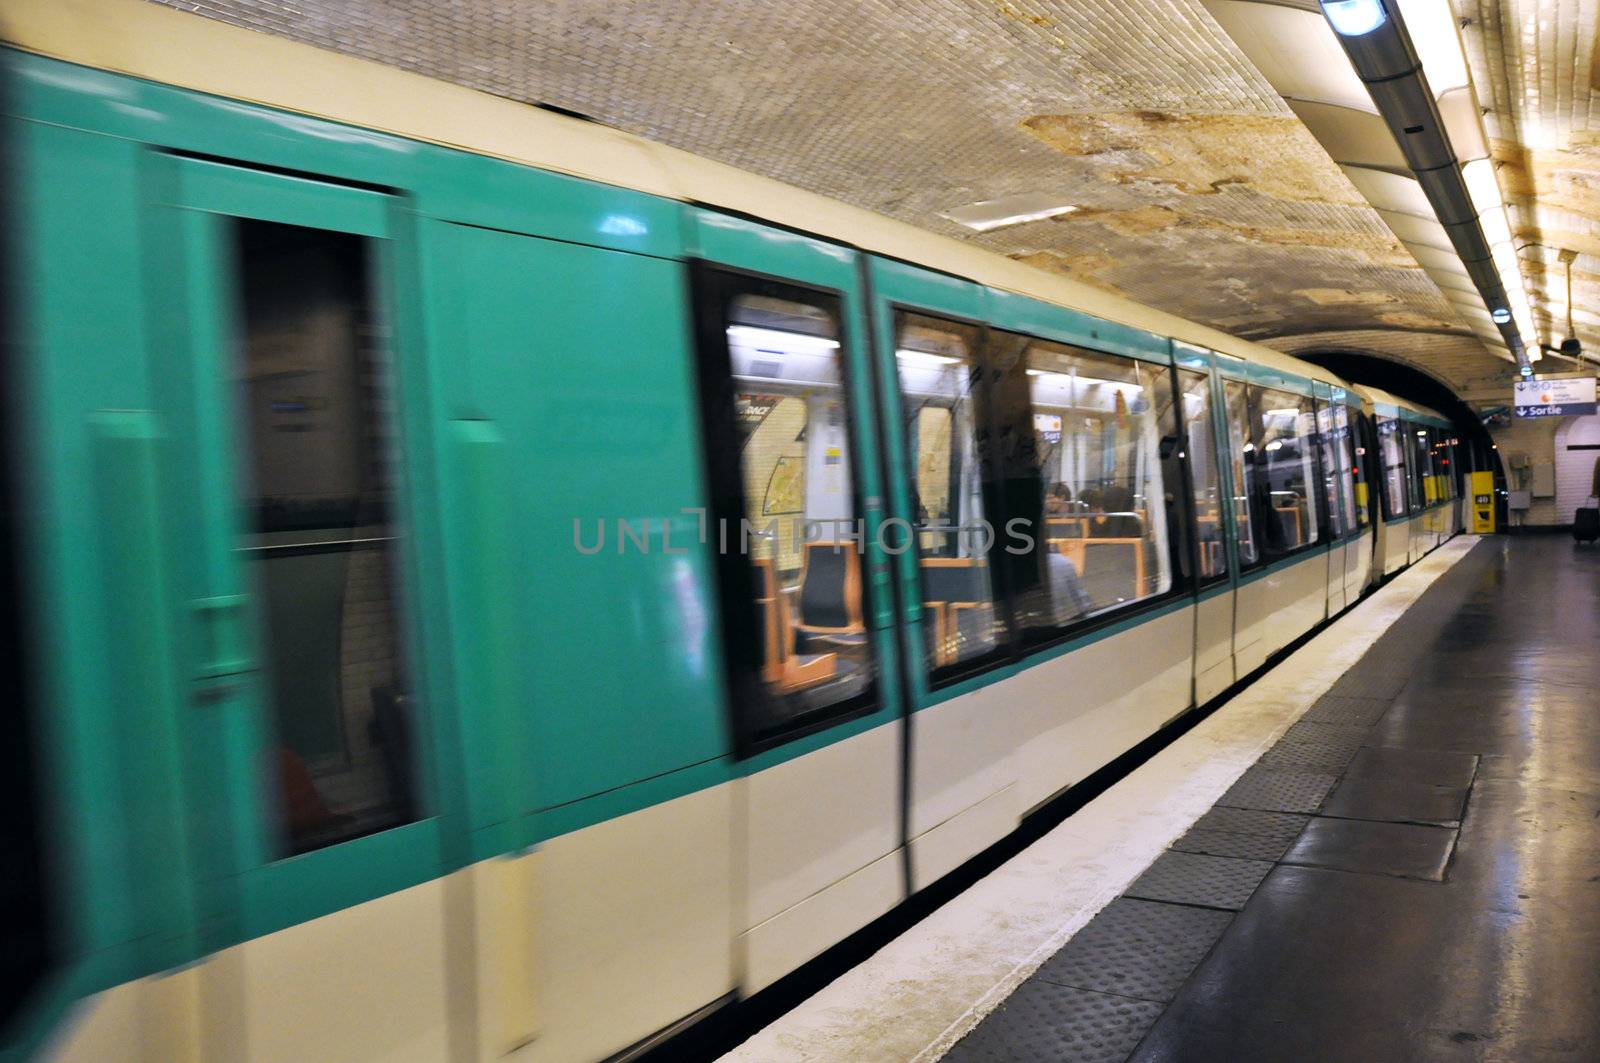 Parisian metro in a station